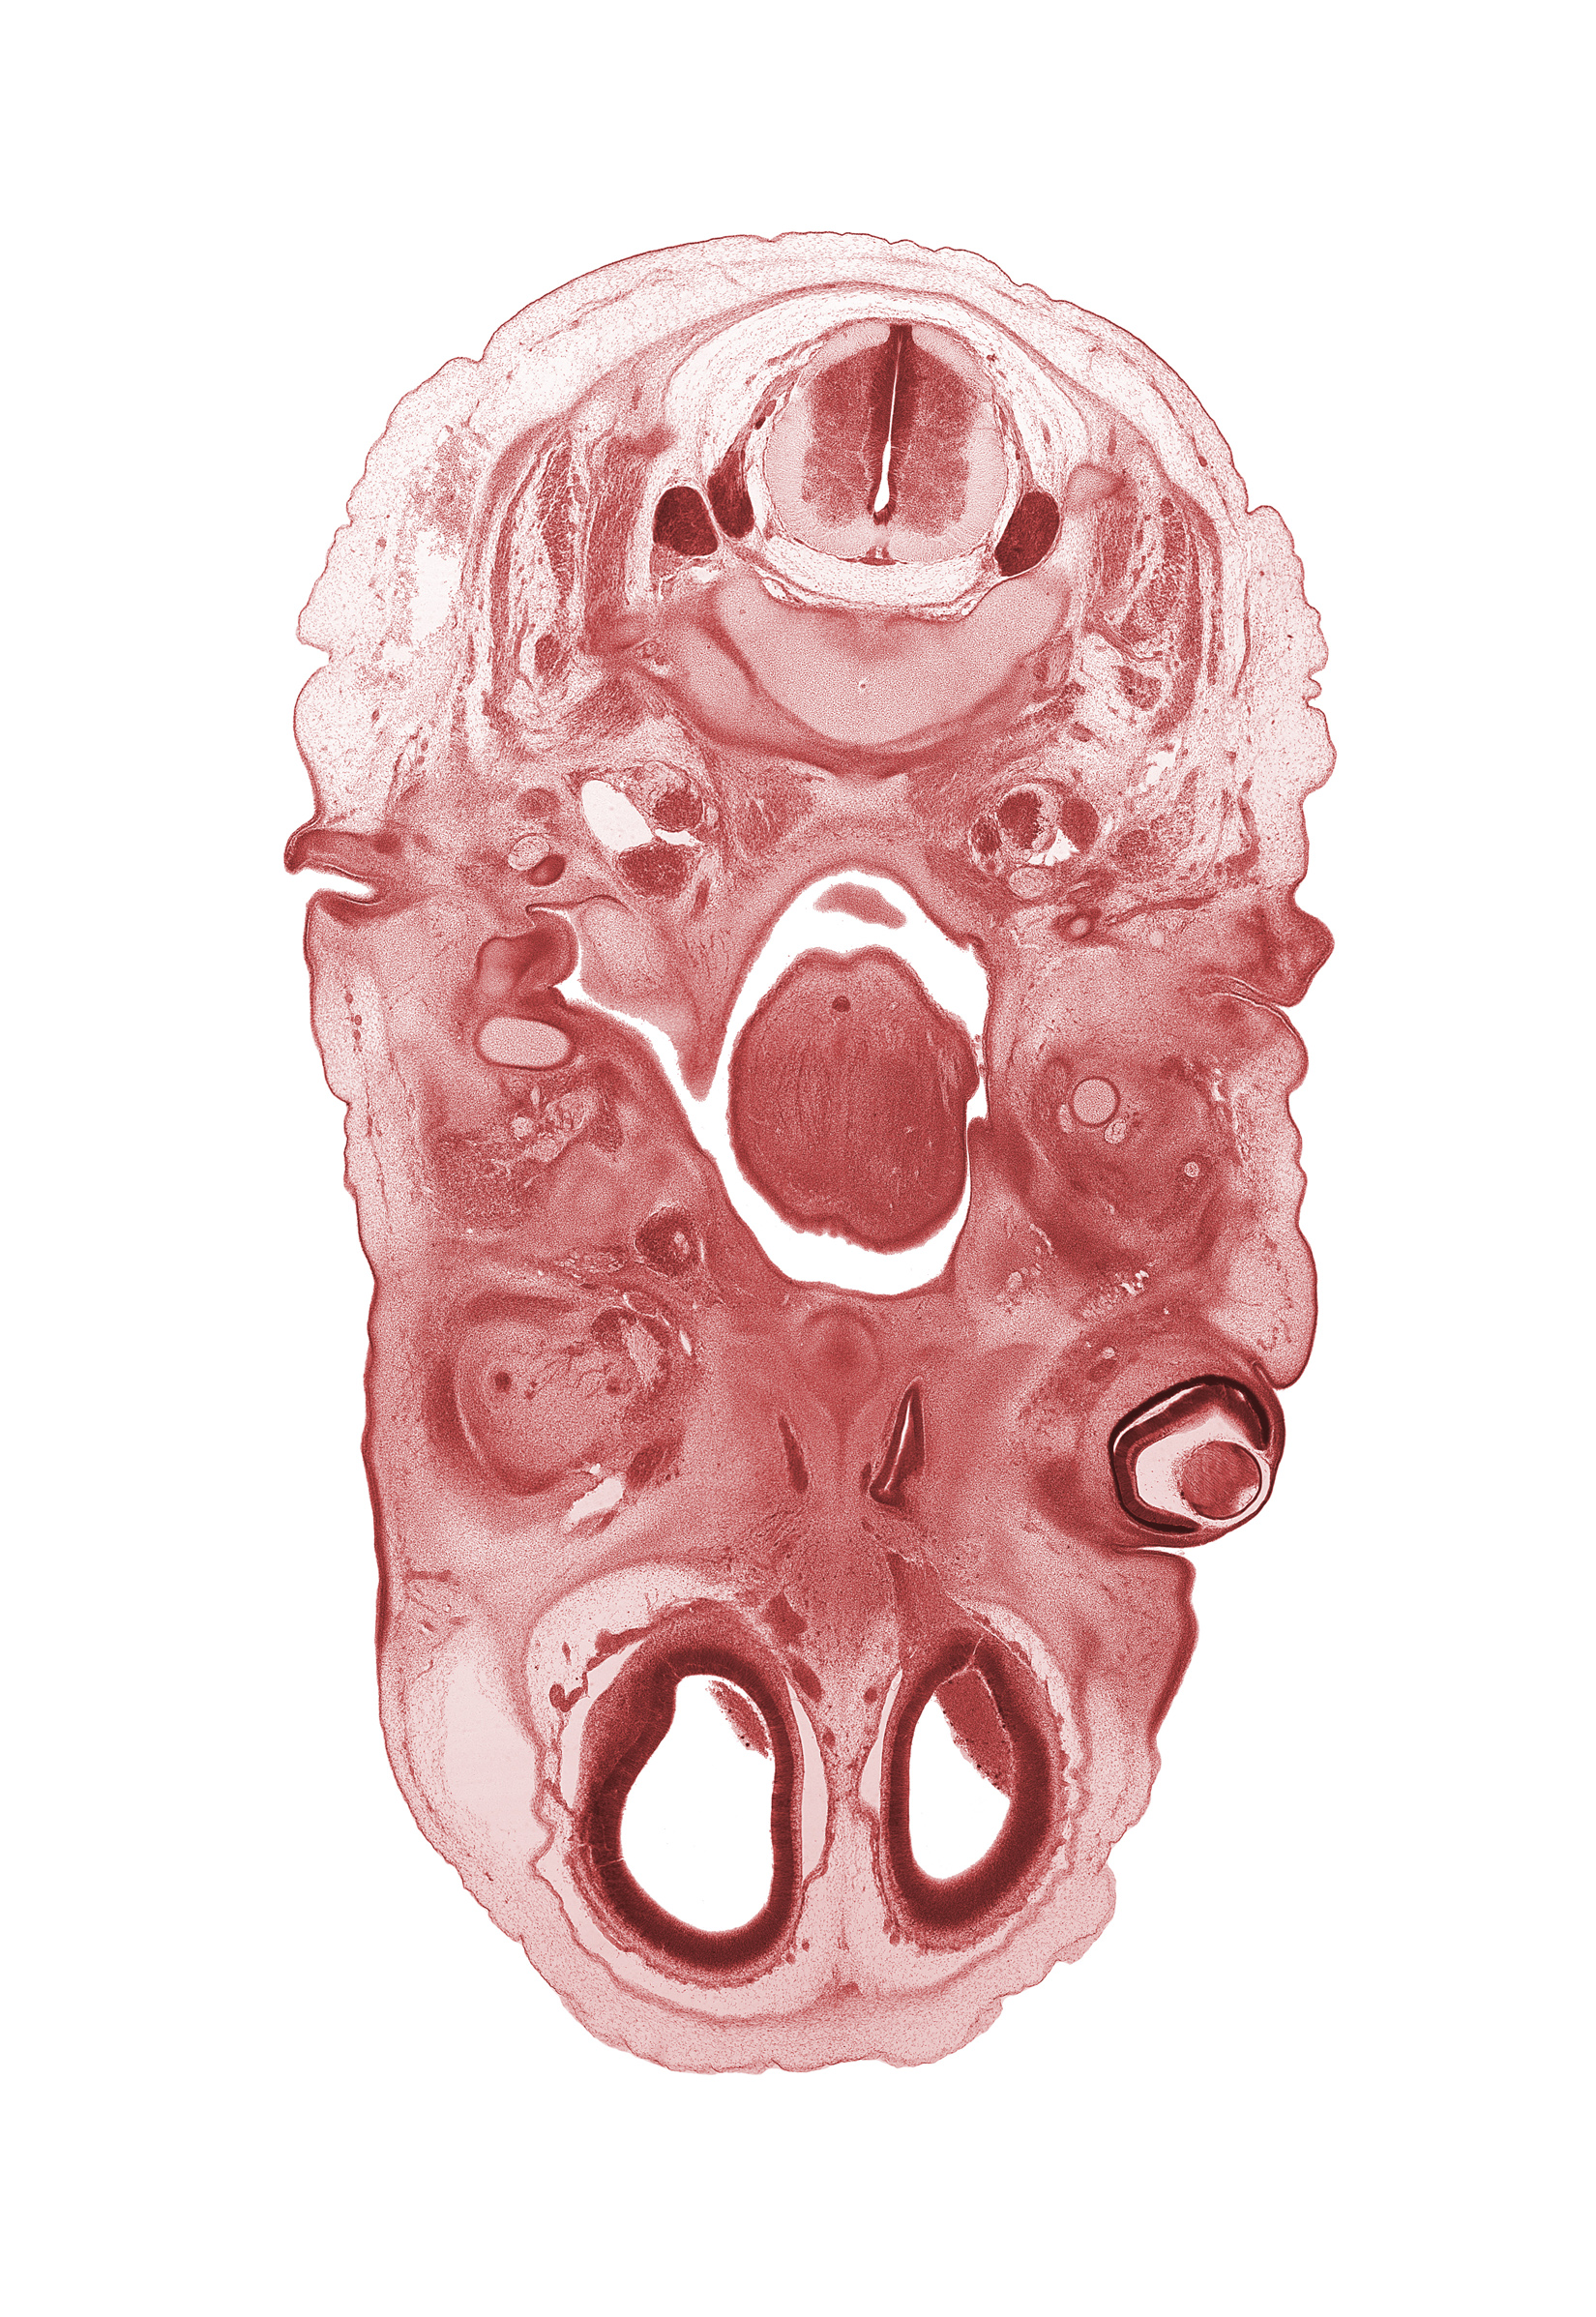 C-3 dorsal root, C-3 spinal ganglion, anterior cerebral artery, artifact separation(s), blastema of medial rectus muscle, blastemata of tongue muscles, cerebral vesicle (telencephalon), edge of epiglottis, edge of nasal cavity (nasal sac), edge of palatine shelf, glossopharyngeal nerve (CN IX), inferior ganglion of vagus nerve (CN X), internal jugular vein, lateral ventricle, nasopharynx, osteogenic layer, pharyngotympanic tube, superior cervical sympathetic ganglion, supra-orbital vein, thyroglossal duct, vertebral artery